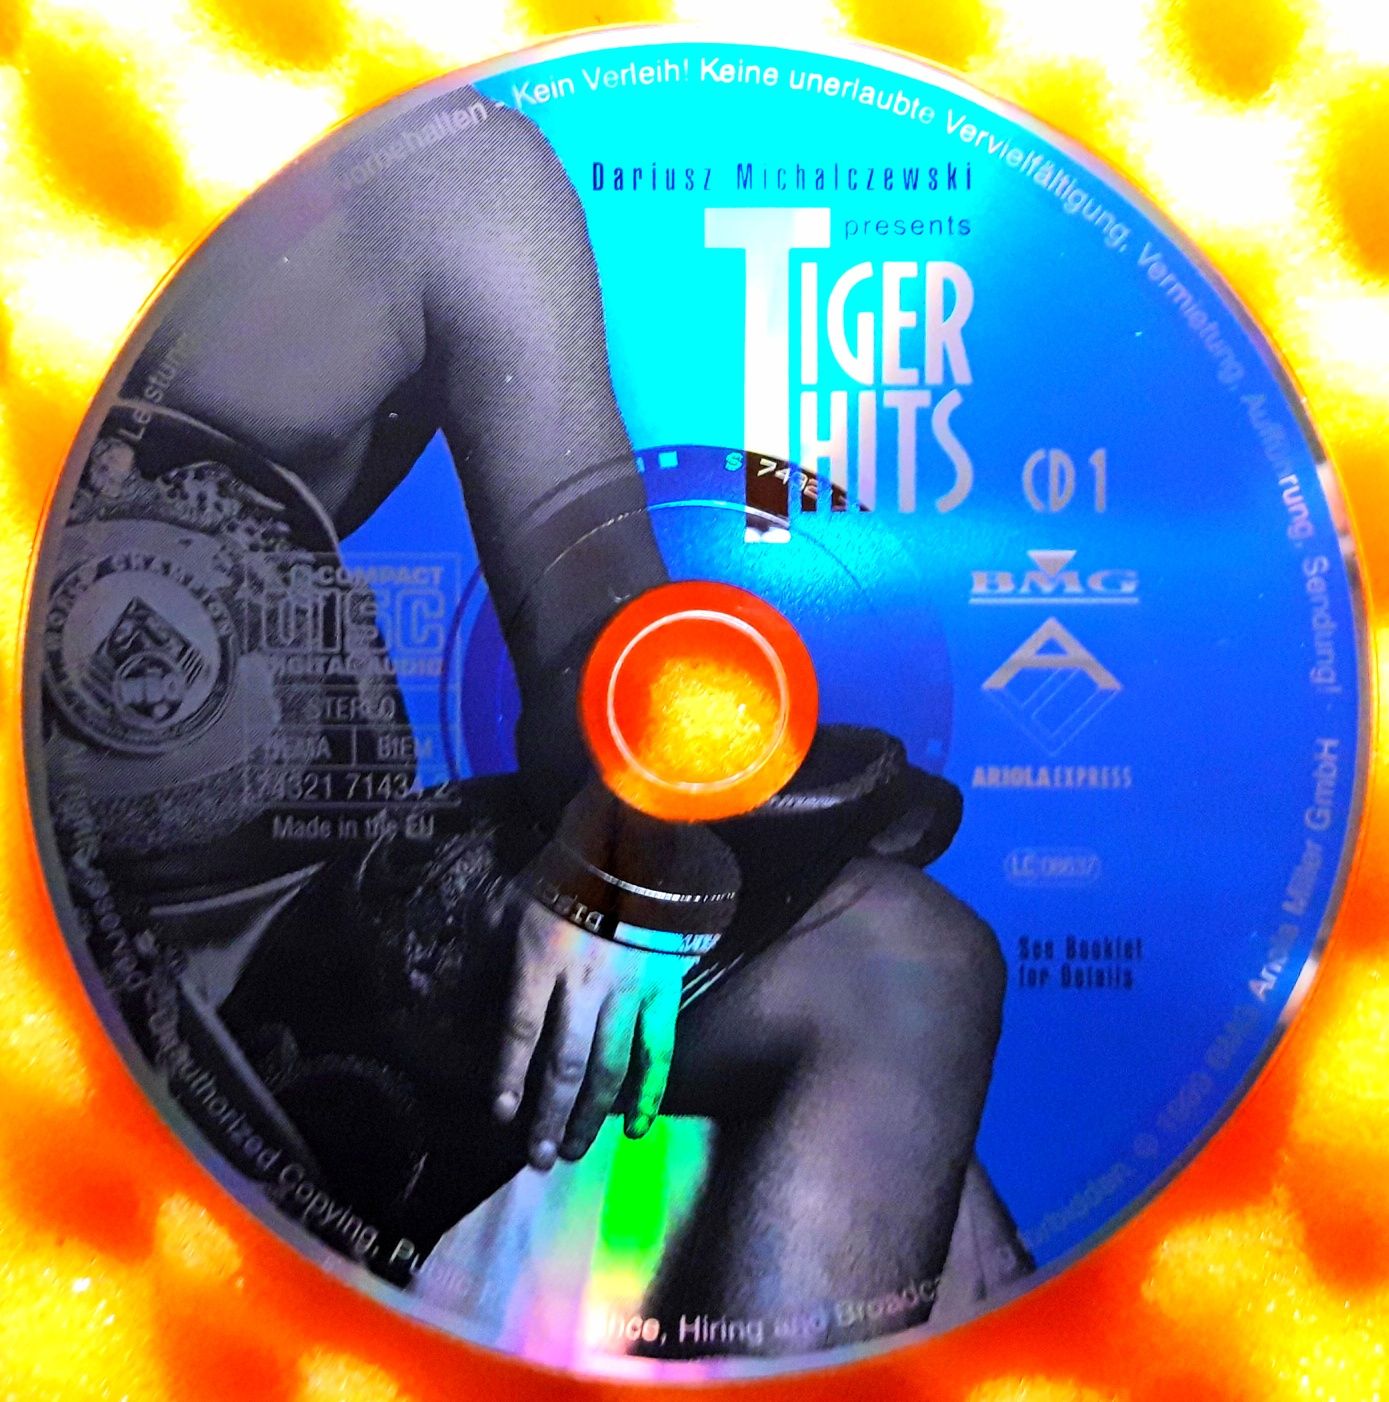 Dariusz Michalczewski Presents - Tiger Hits CD1 (CD, 1999)